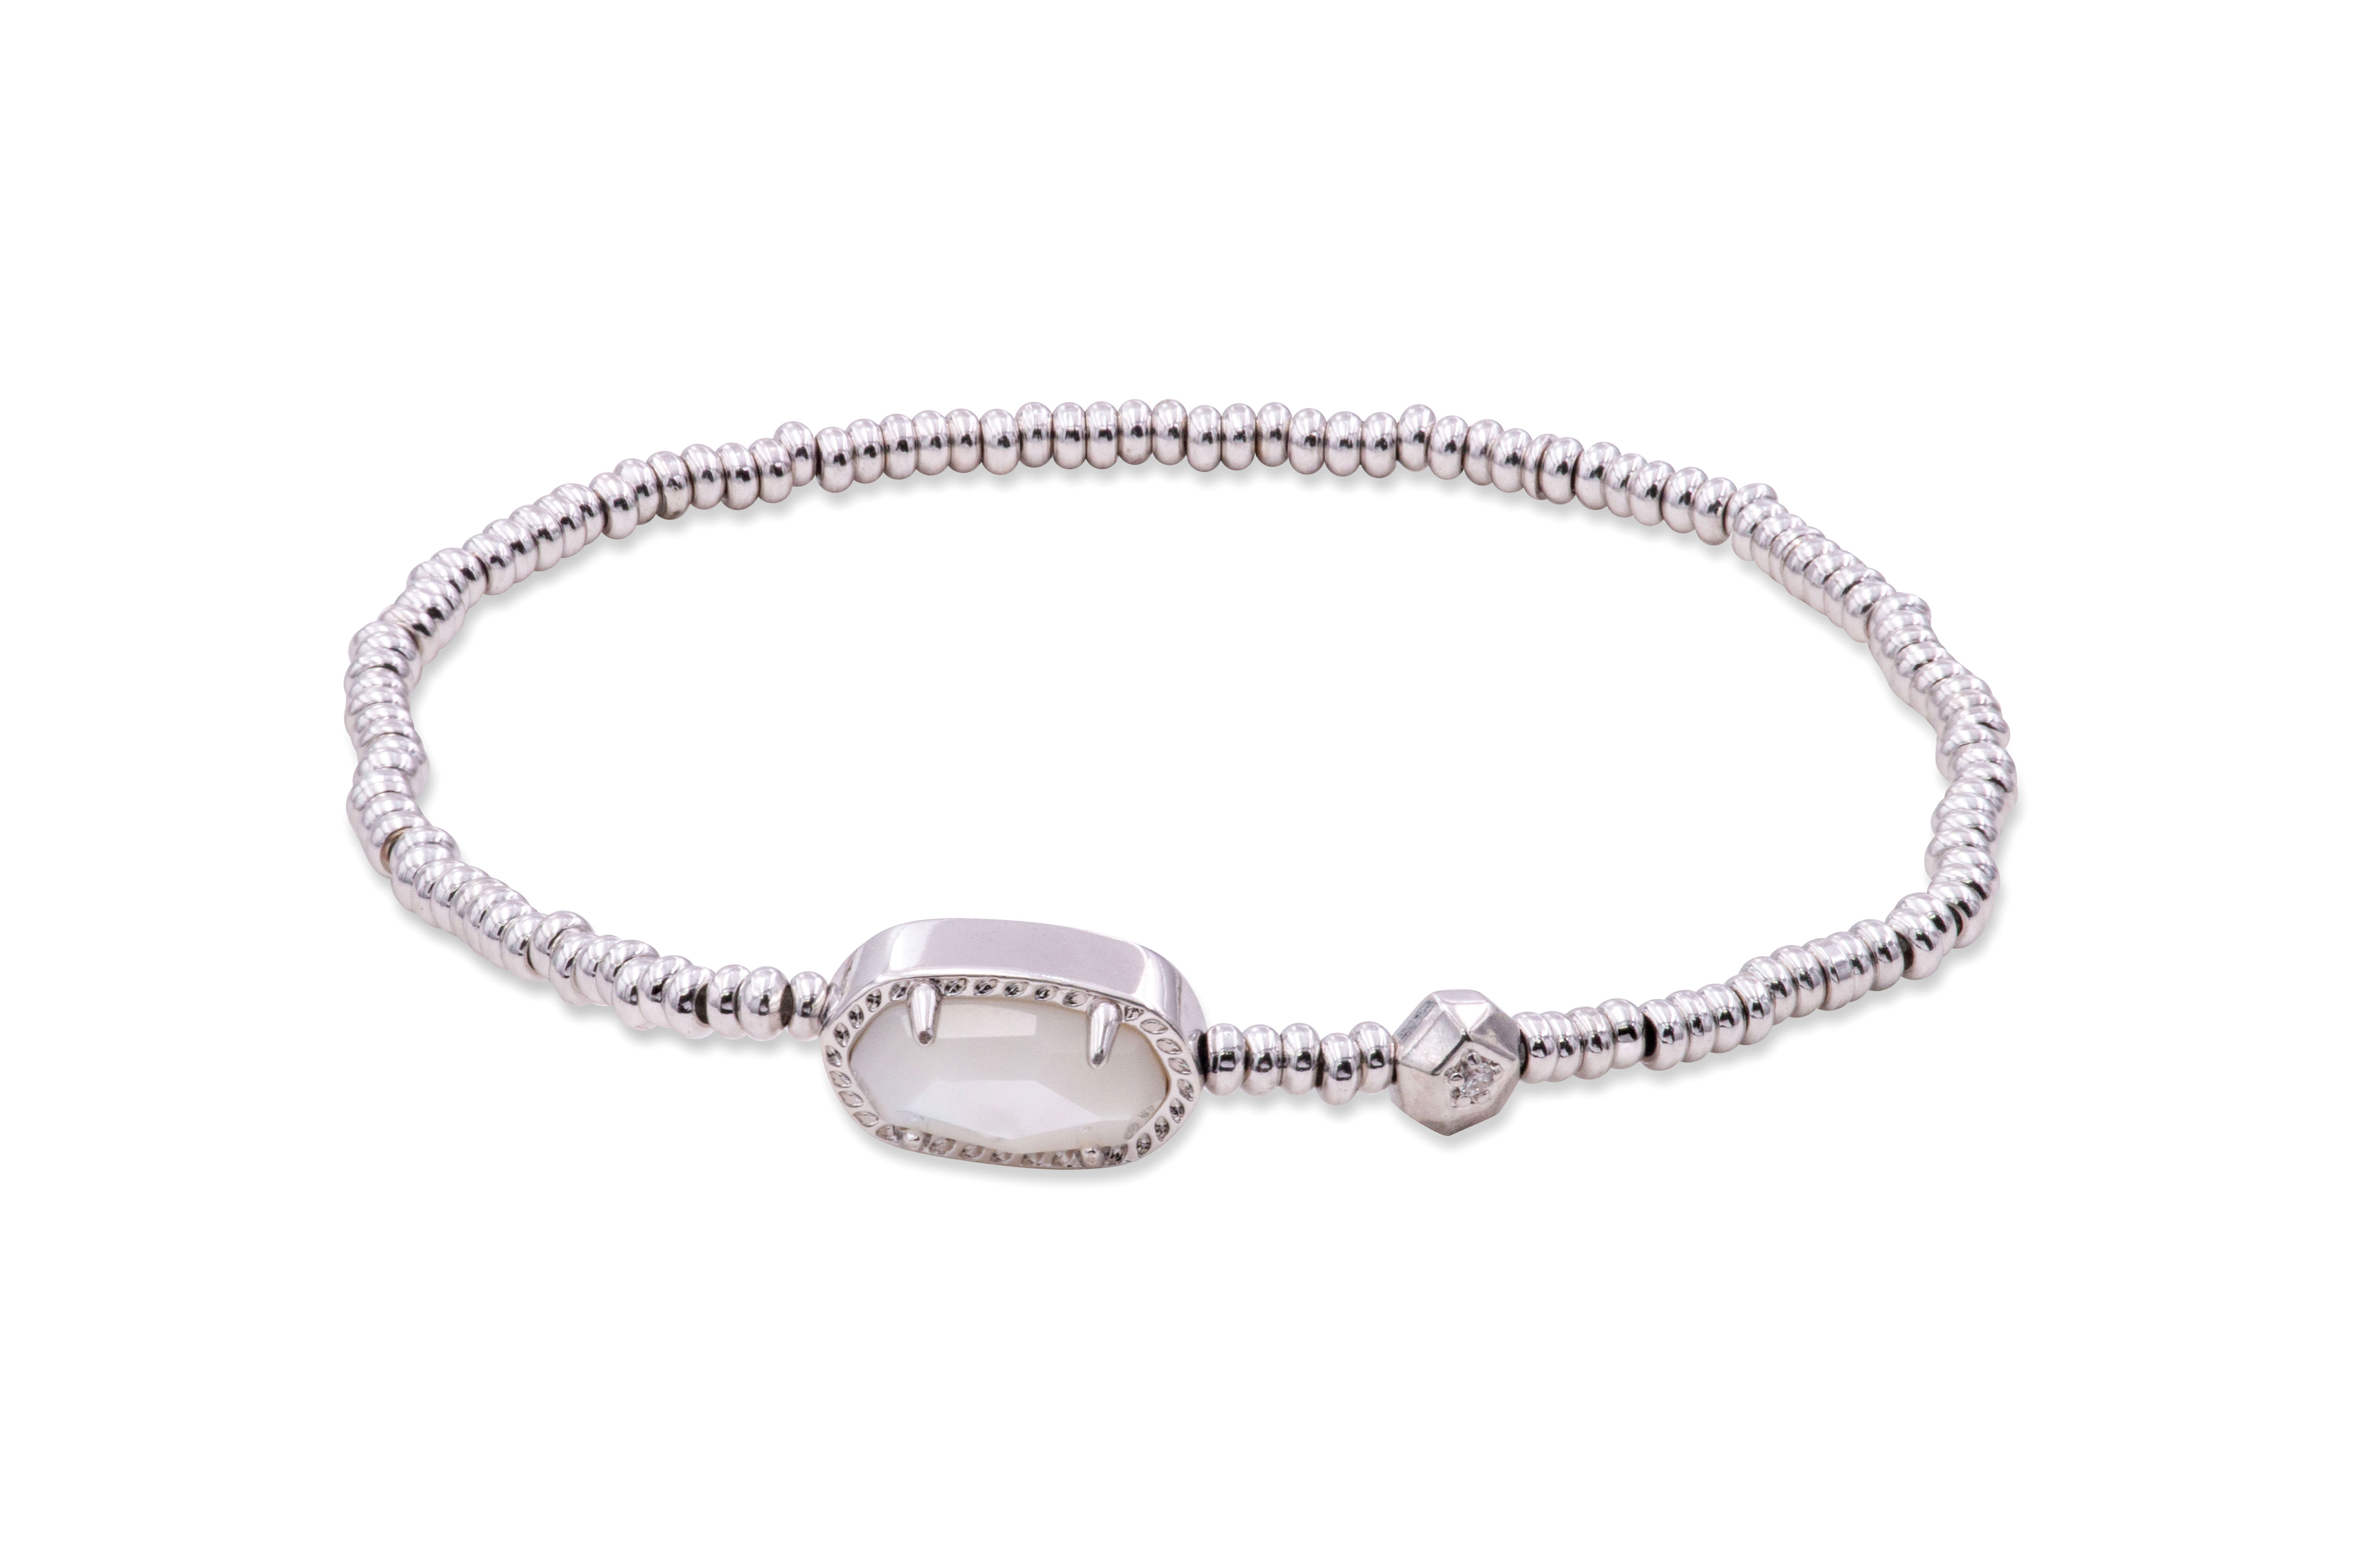 Kendra Scott Grayson Silver Stretch Bracelet in Ivory Mother-of-Pearl